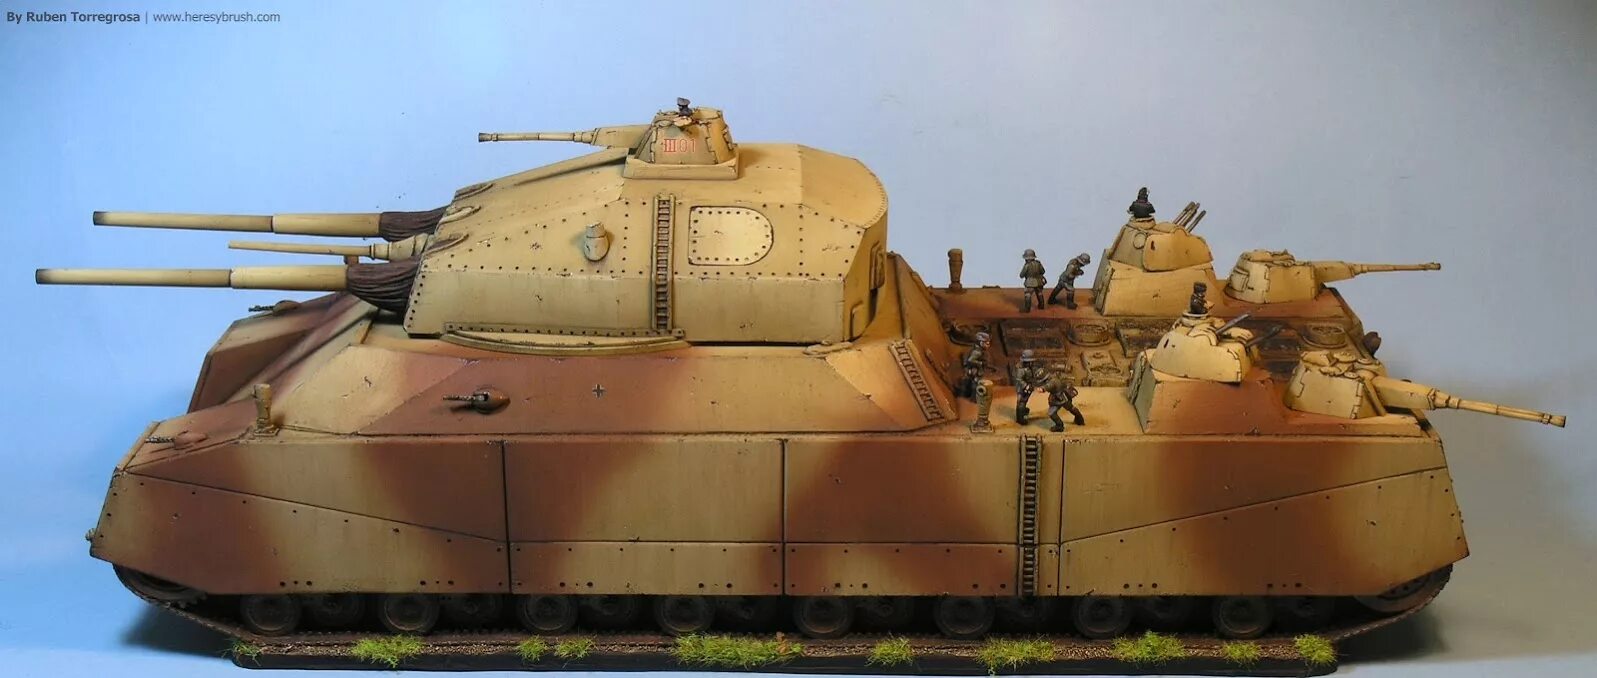 Большой немецкий танк. Ratte танк. Танк p1000 крыса. Немецкий сверхтяжелый танк крыса. Тяжелый танк РАТТЕ.